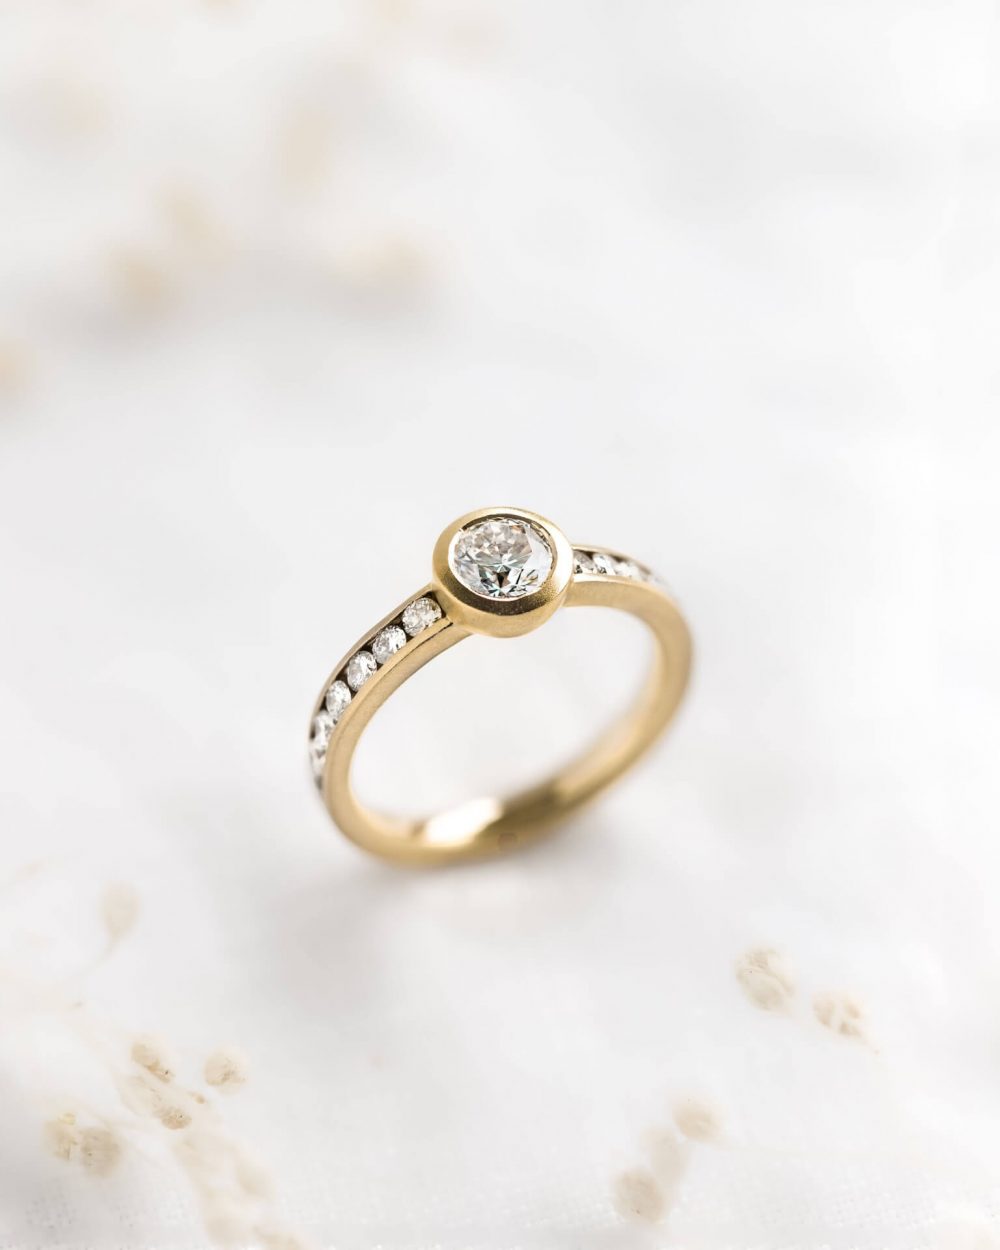 Gold Diamond Engagement Ring Image Jacks Turner Bristol